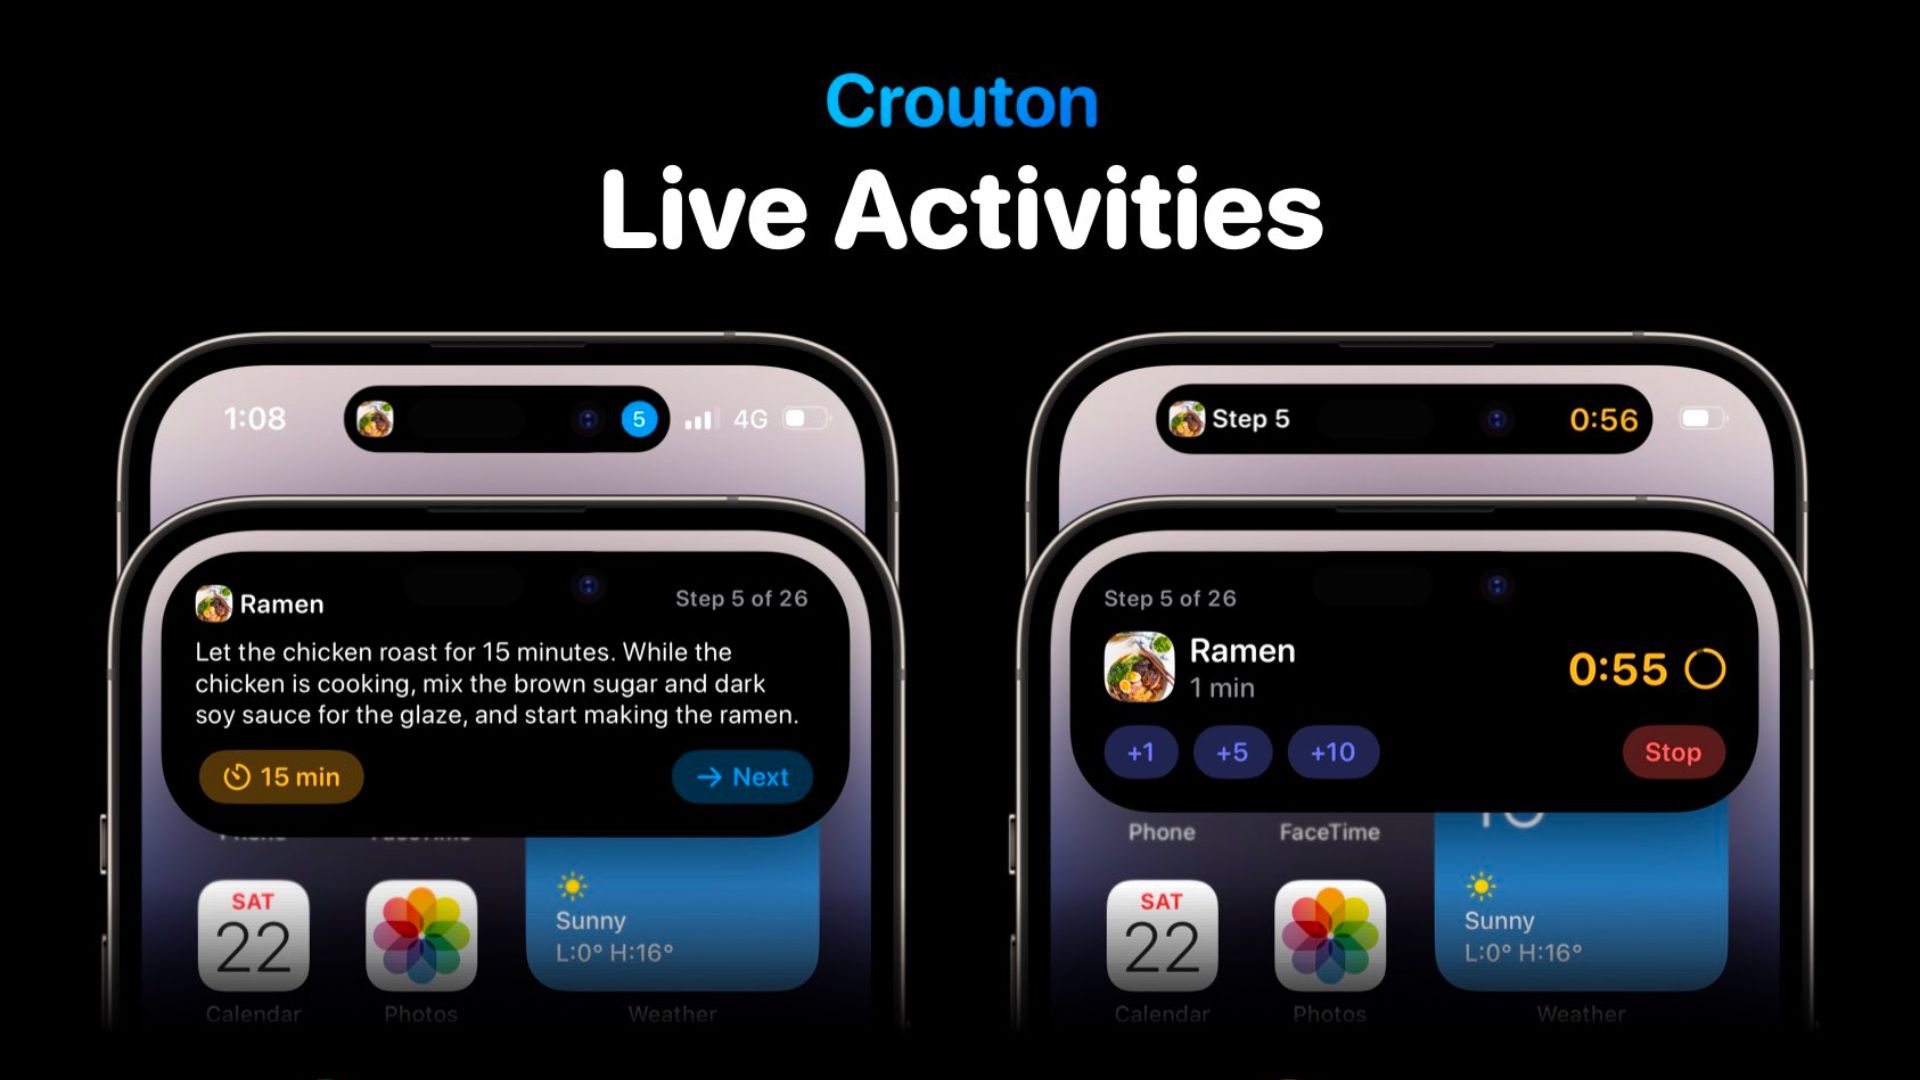 Crouton app Live Activities on iPhone